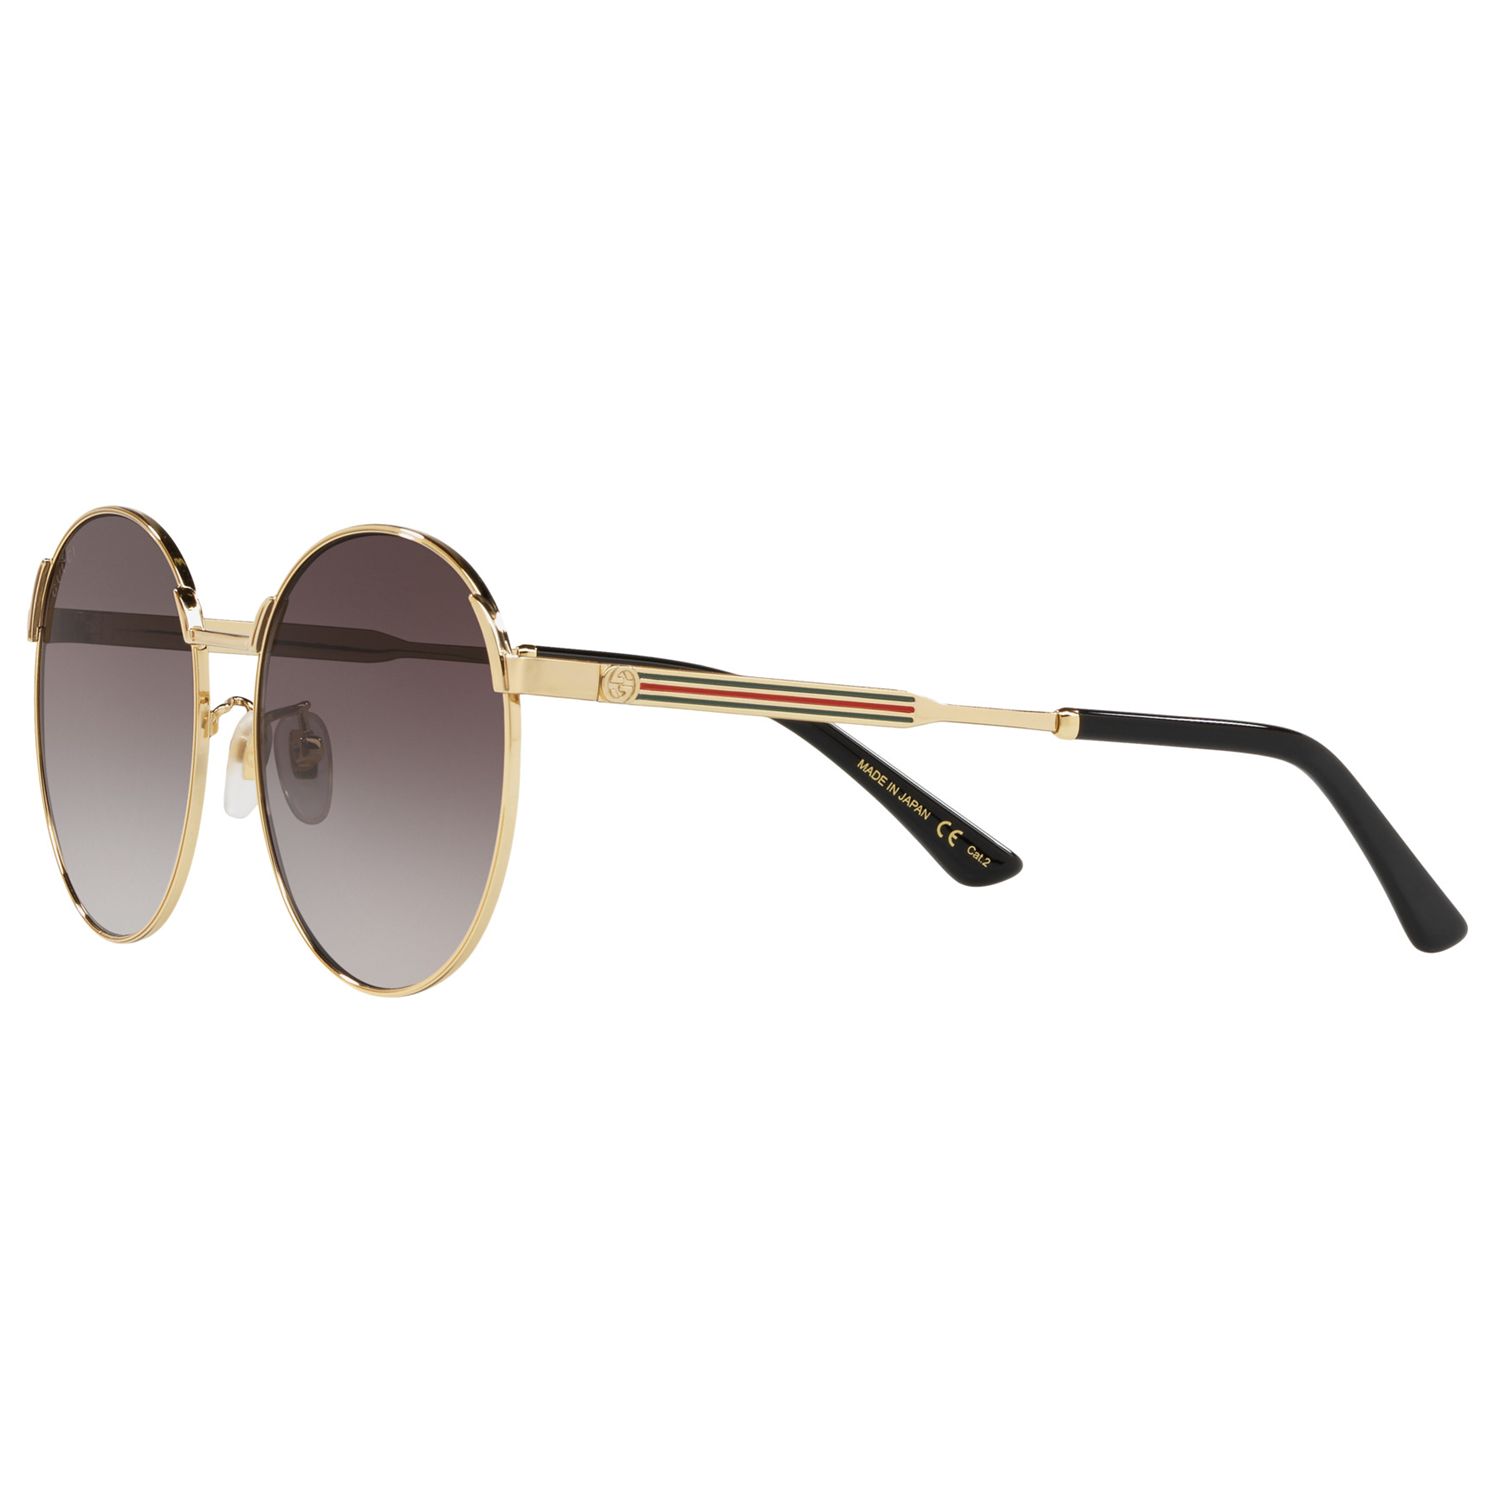 Gucci GG0206SK Oval Sunglasses, Gold/Grey Gradient